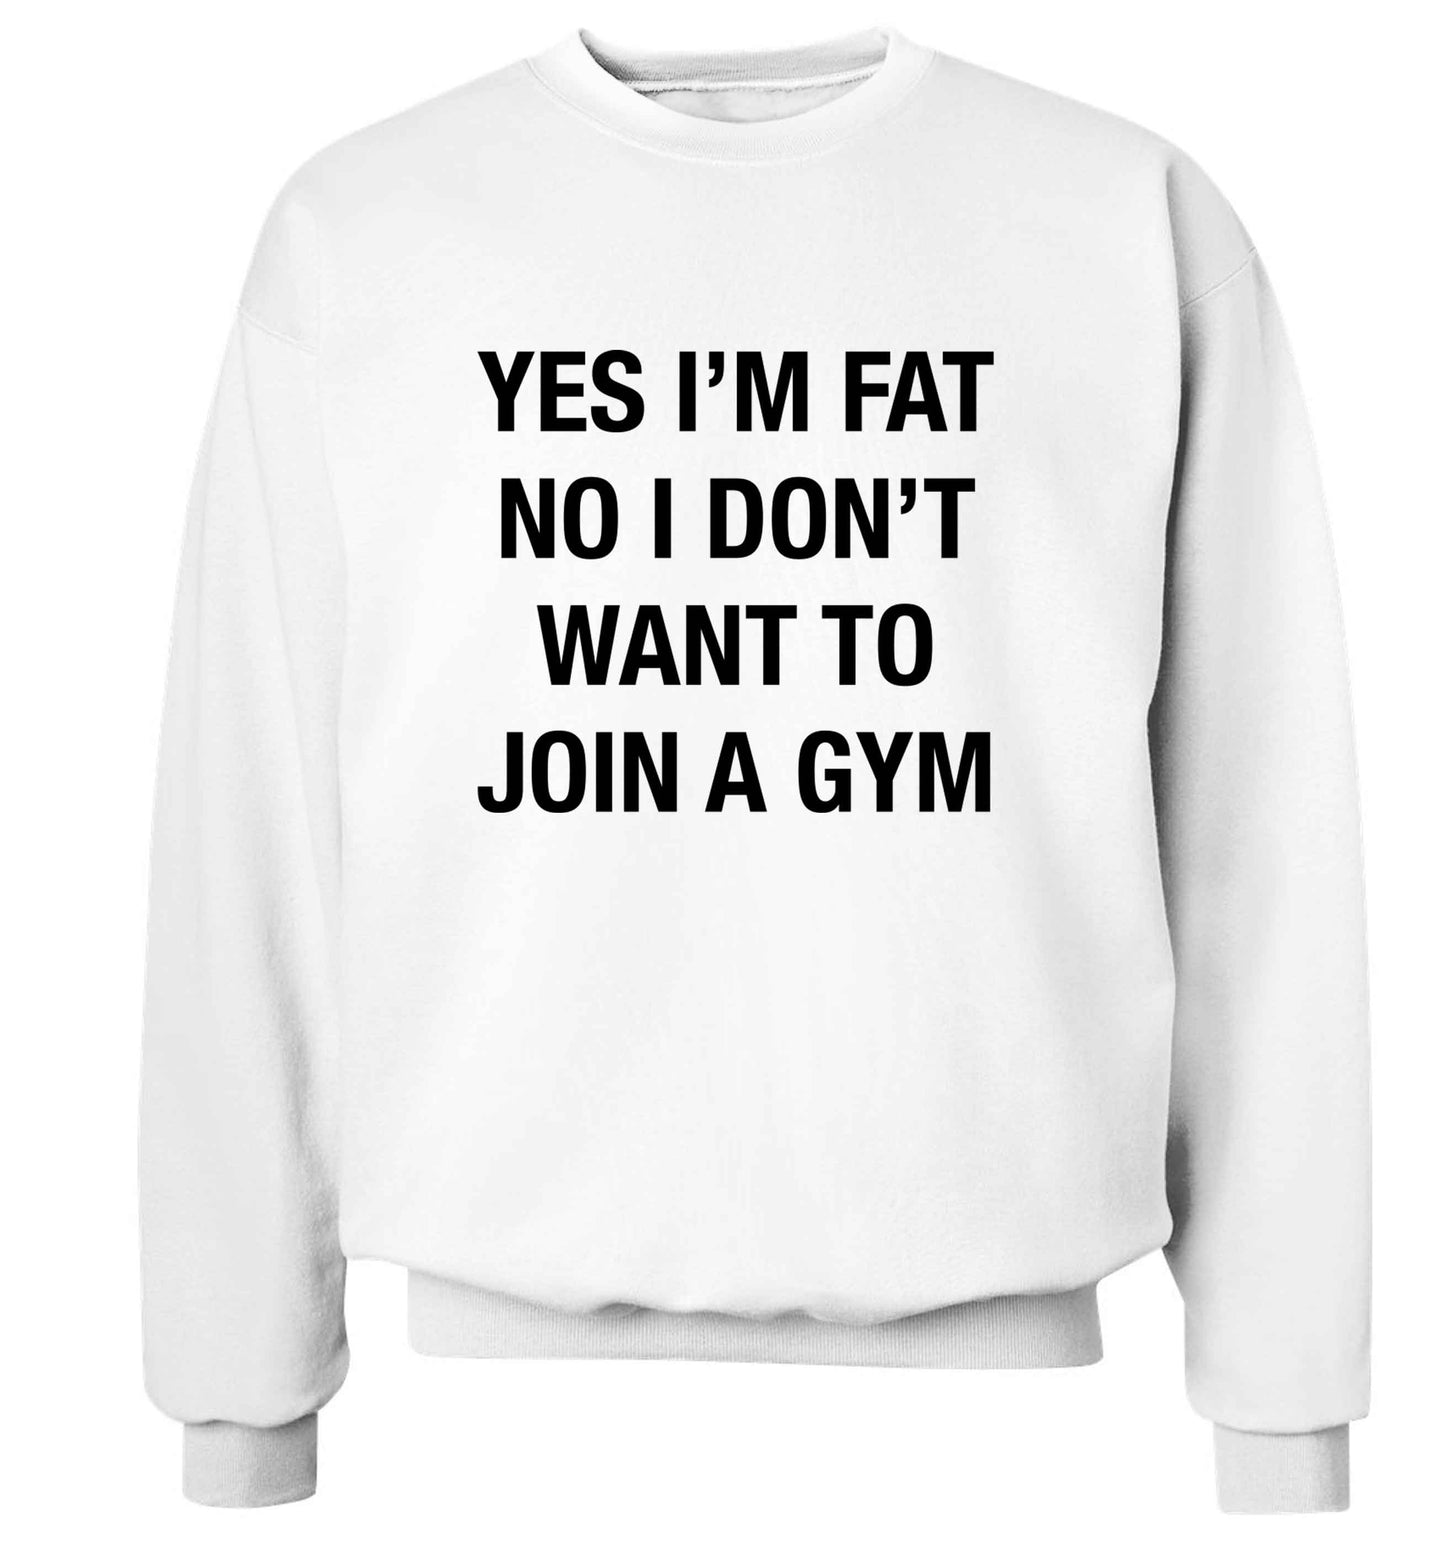 Yes I'm fat, no I don't want to go to the gym adult's unisex white sweater 2XL